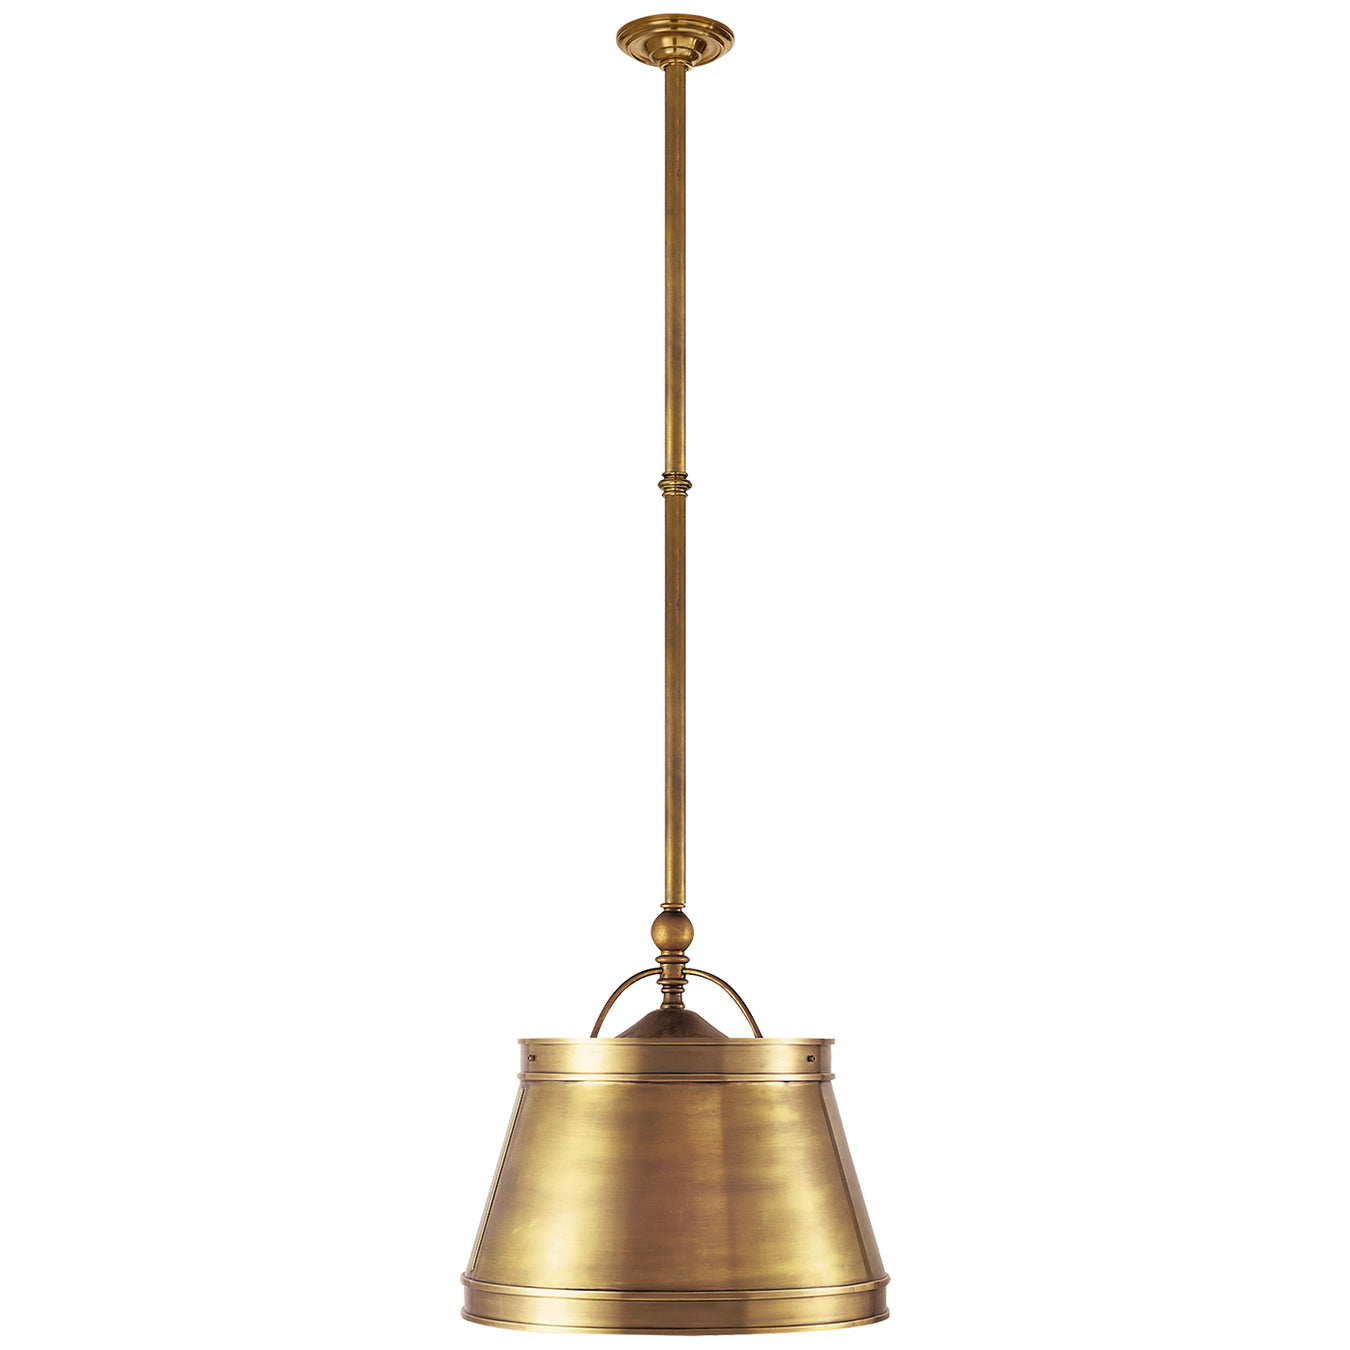 Sloane Street Shop Light Two Light Lantern in Antique-Burnished Brass